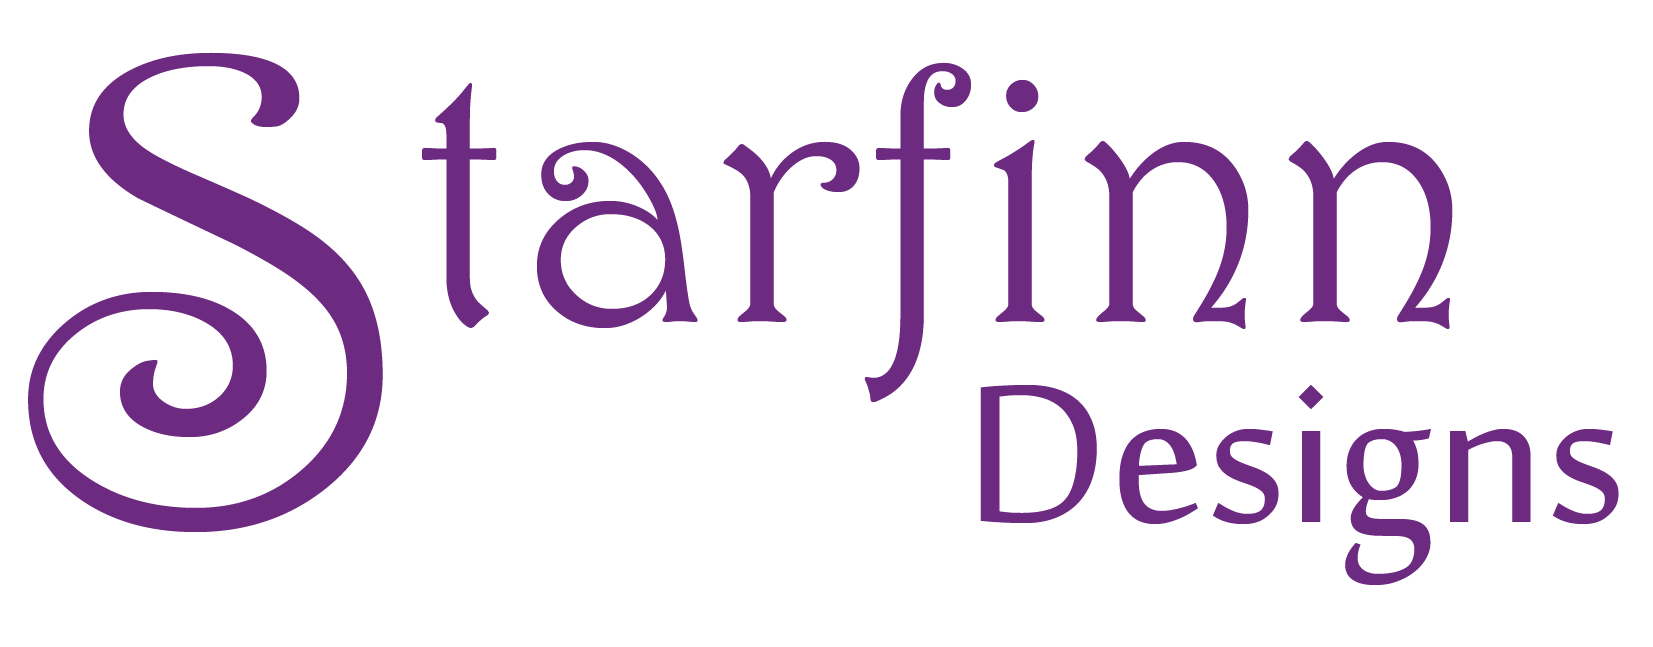 Starfinn Designs